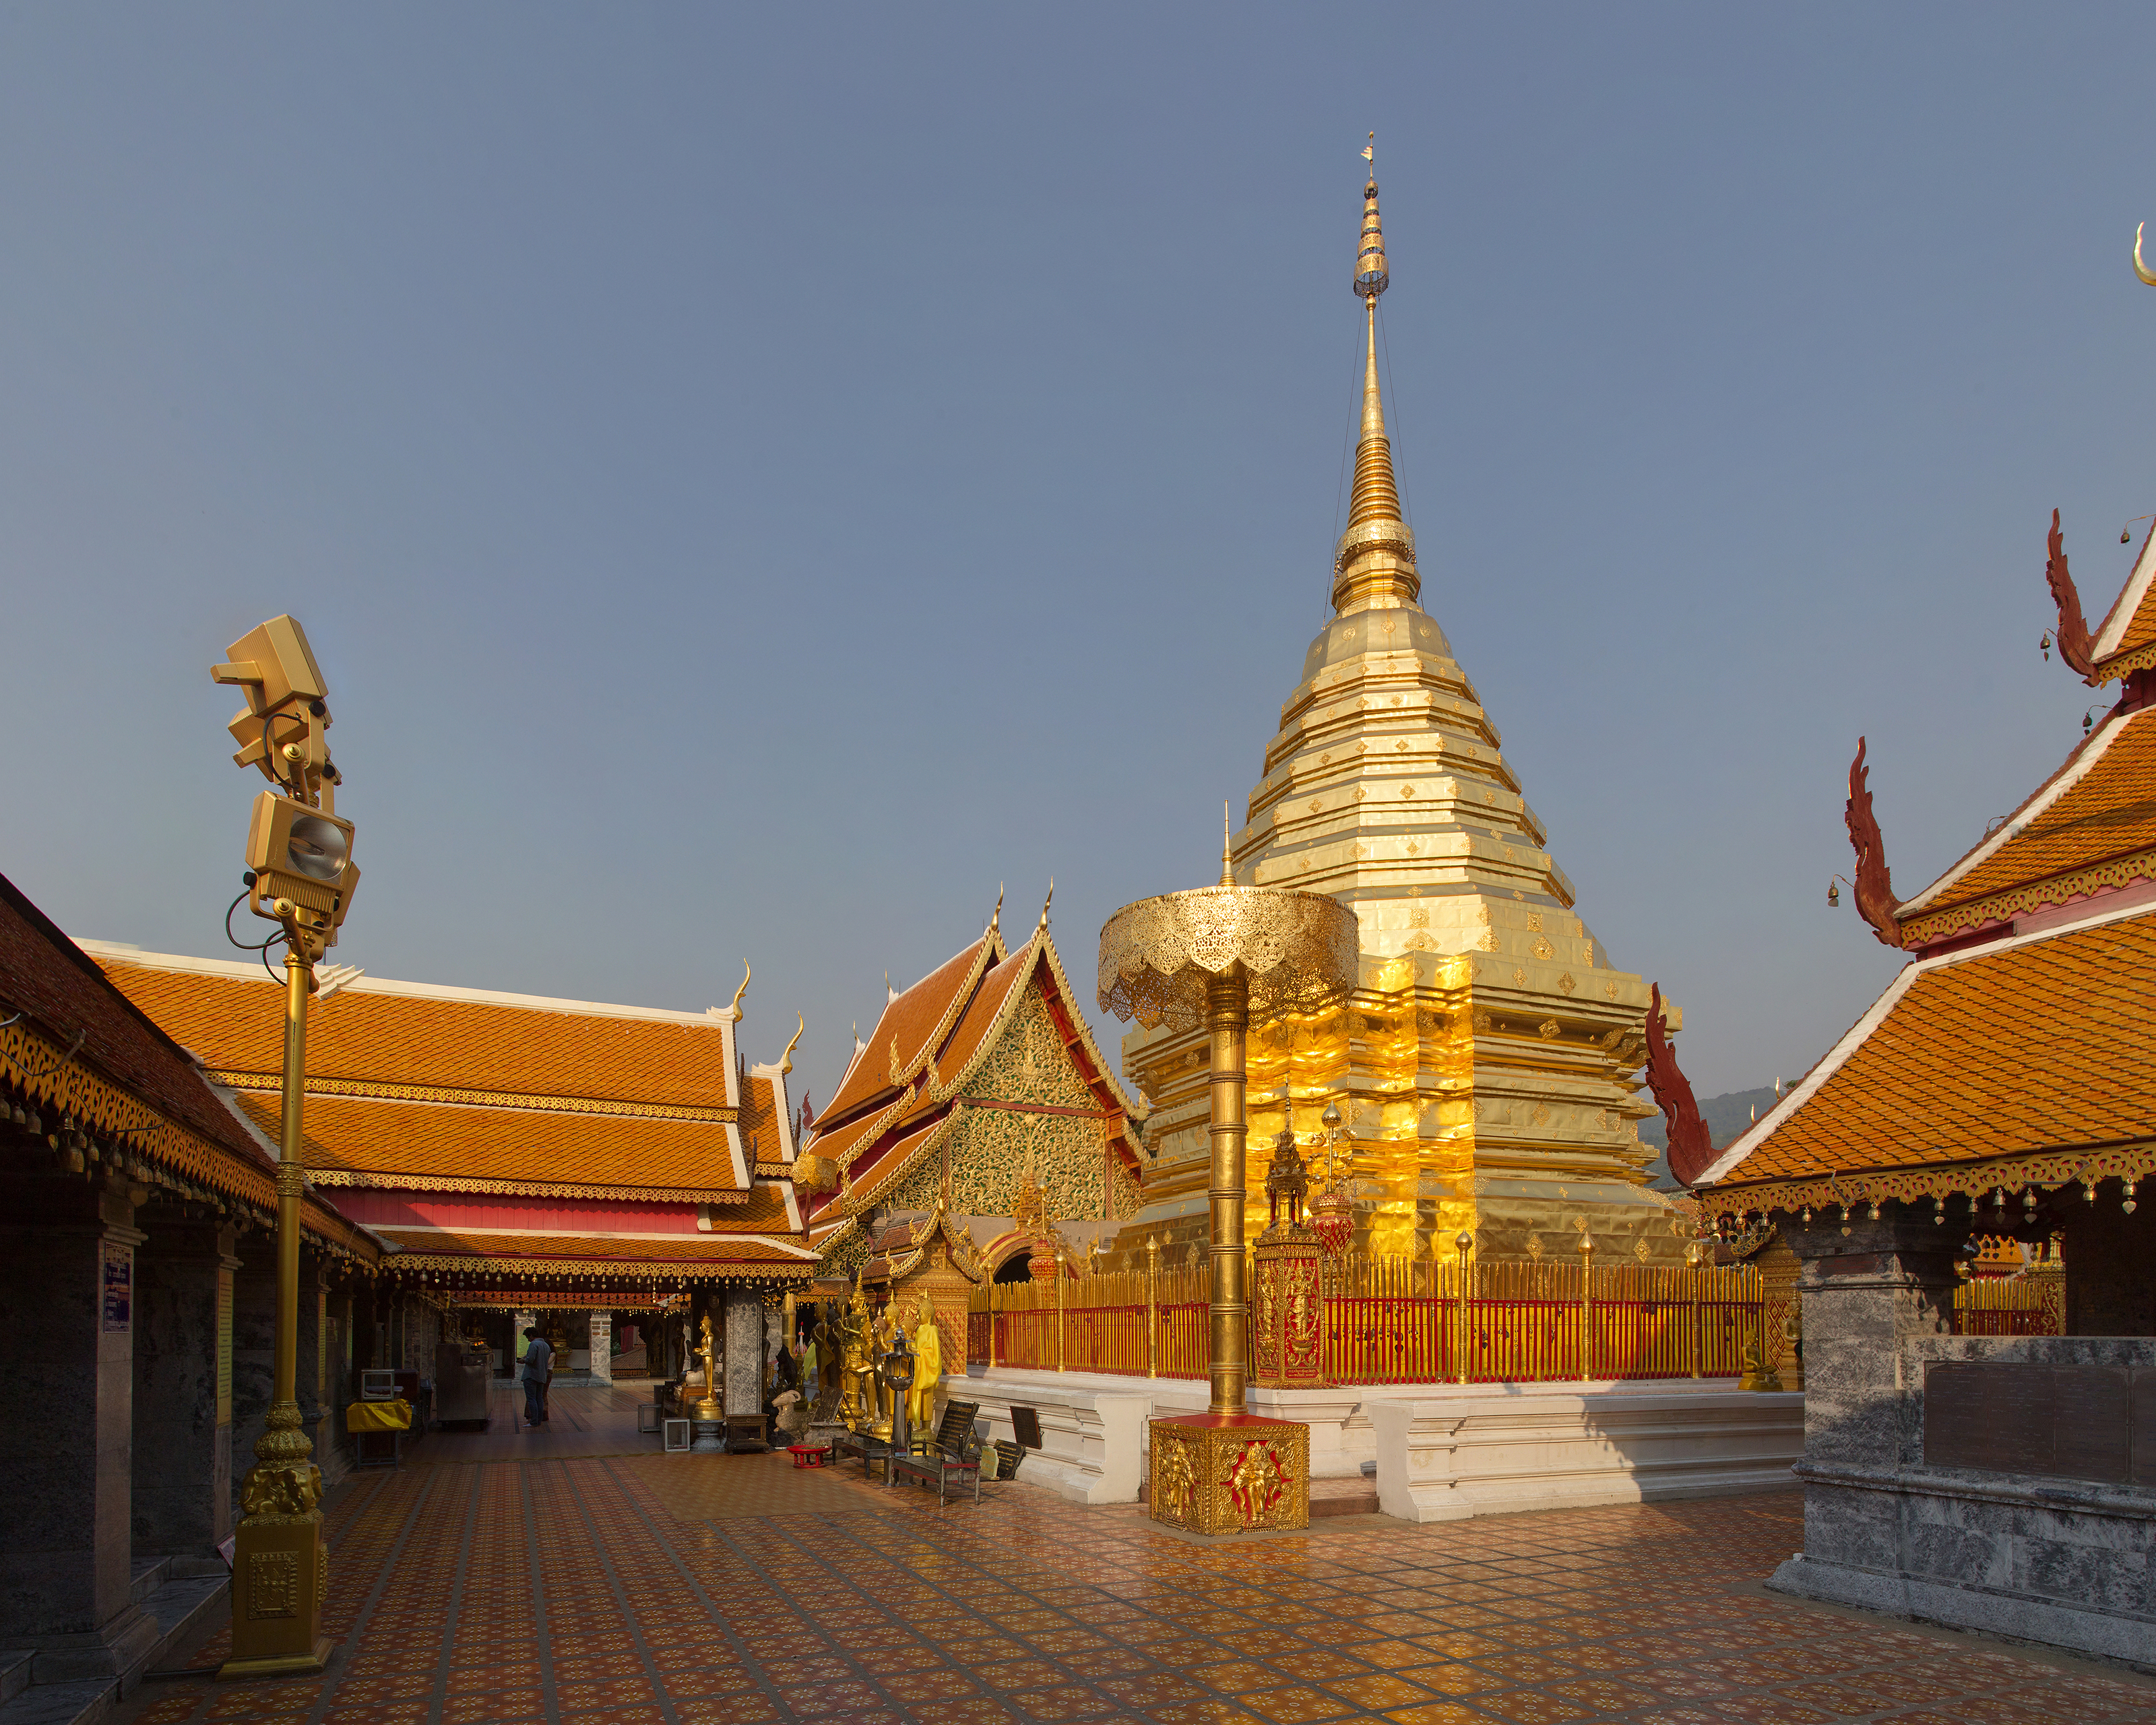 File:Wat Phra That Doi Suthep - Chiang Mai.jpg - Wikipedia